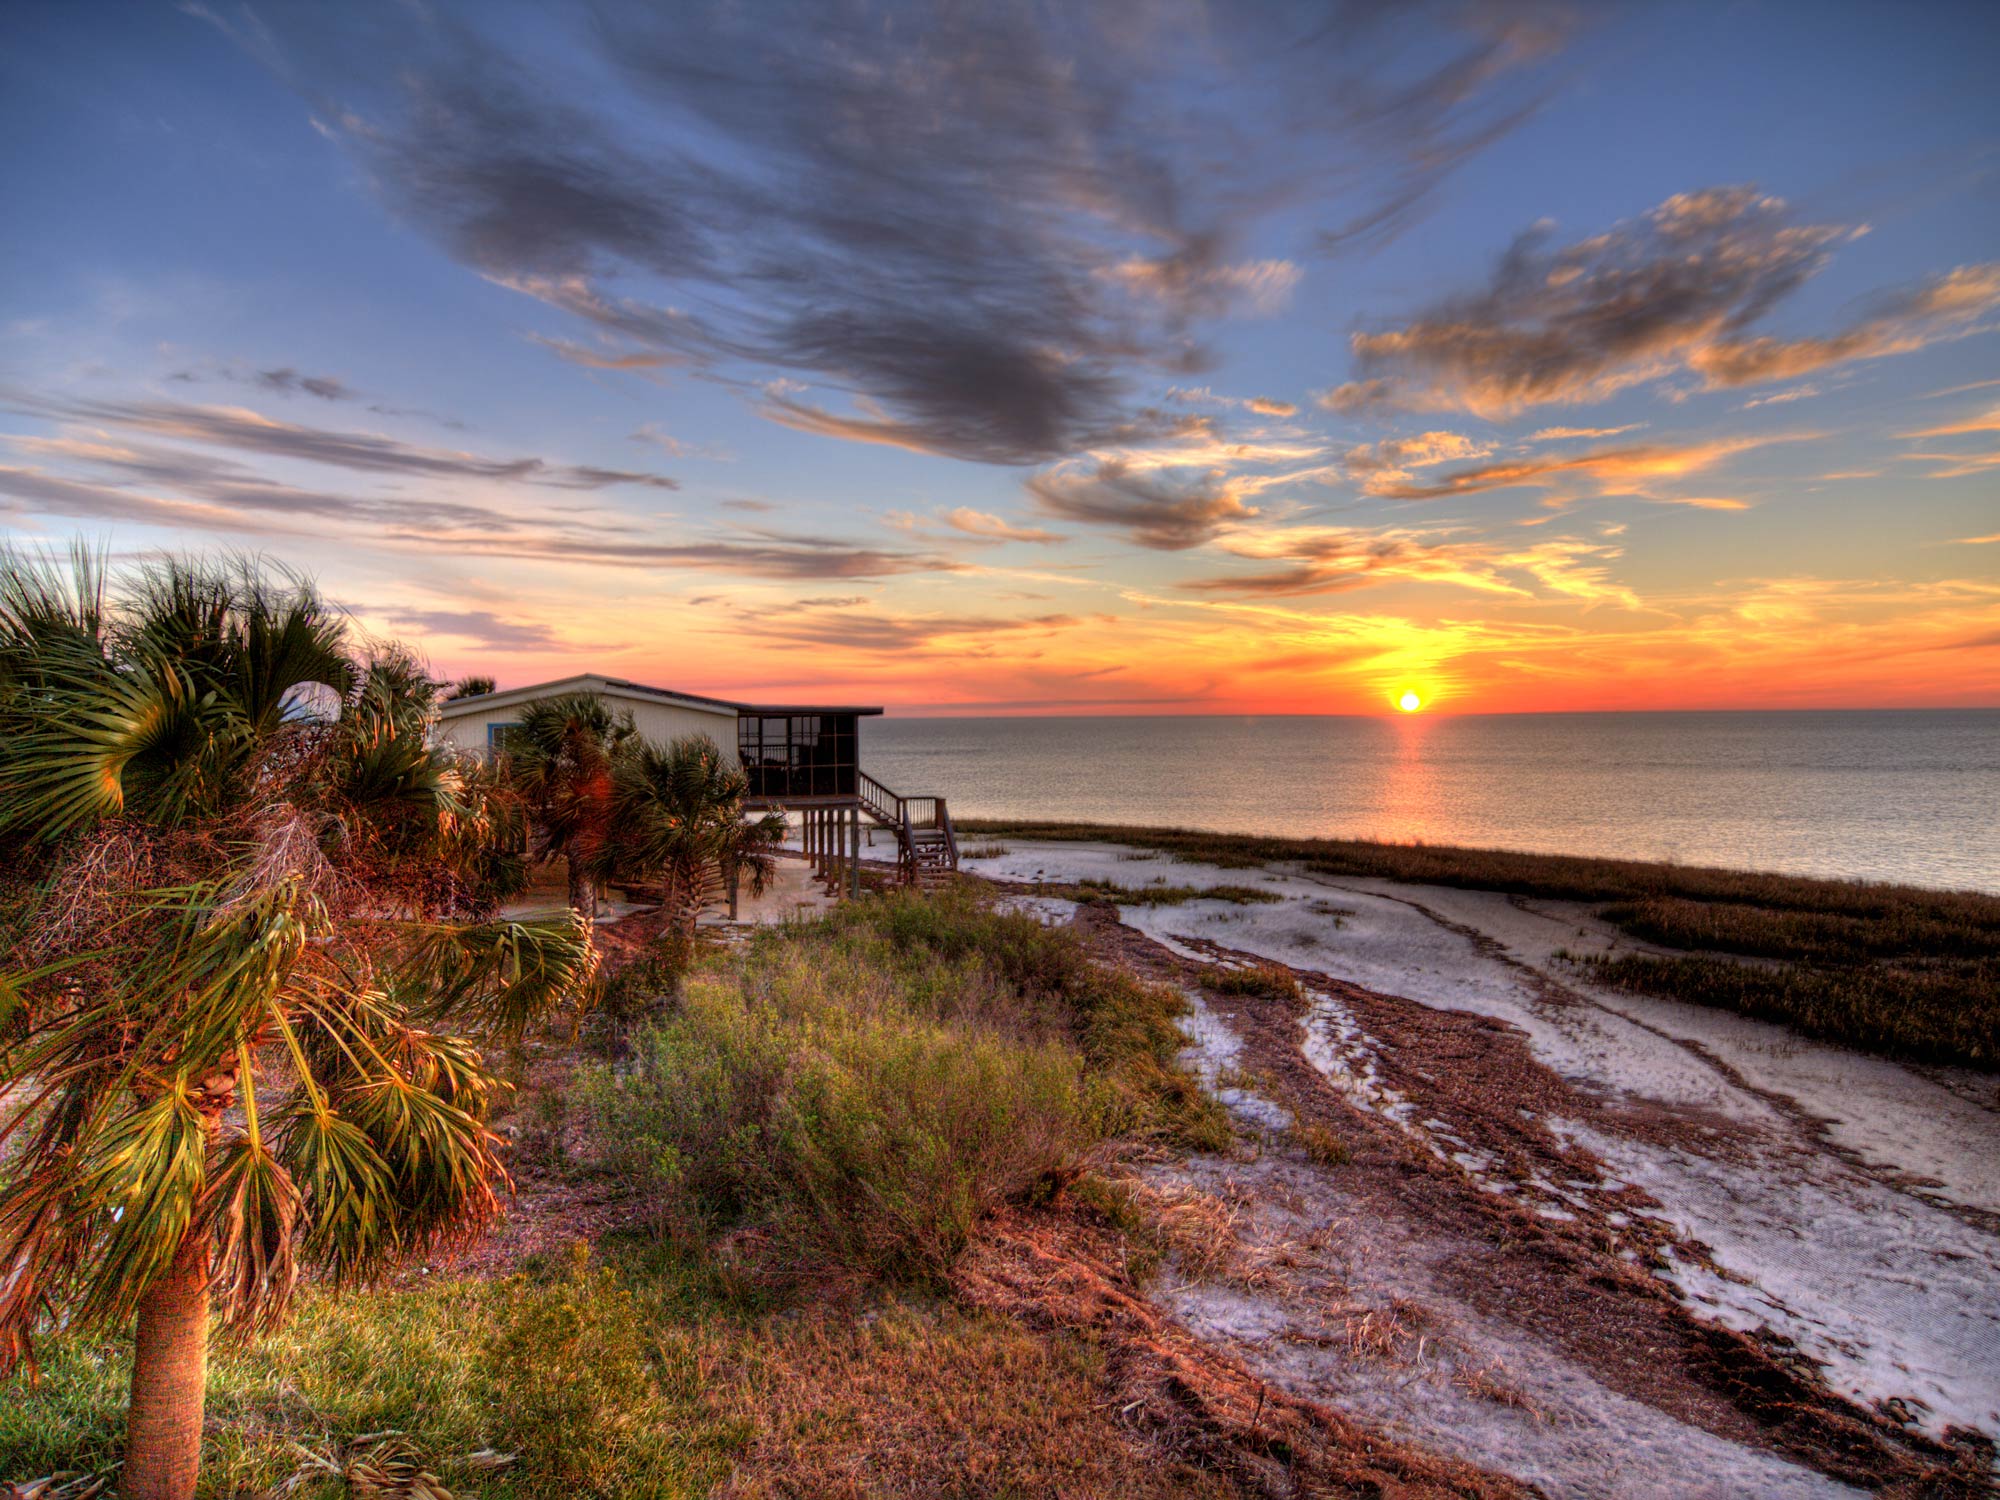 A coastal florida home overlooking the Gulf